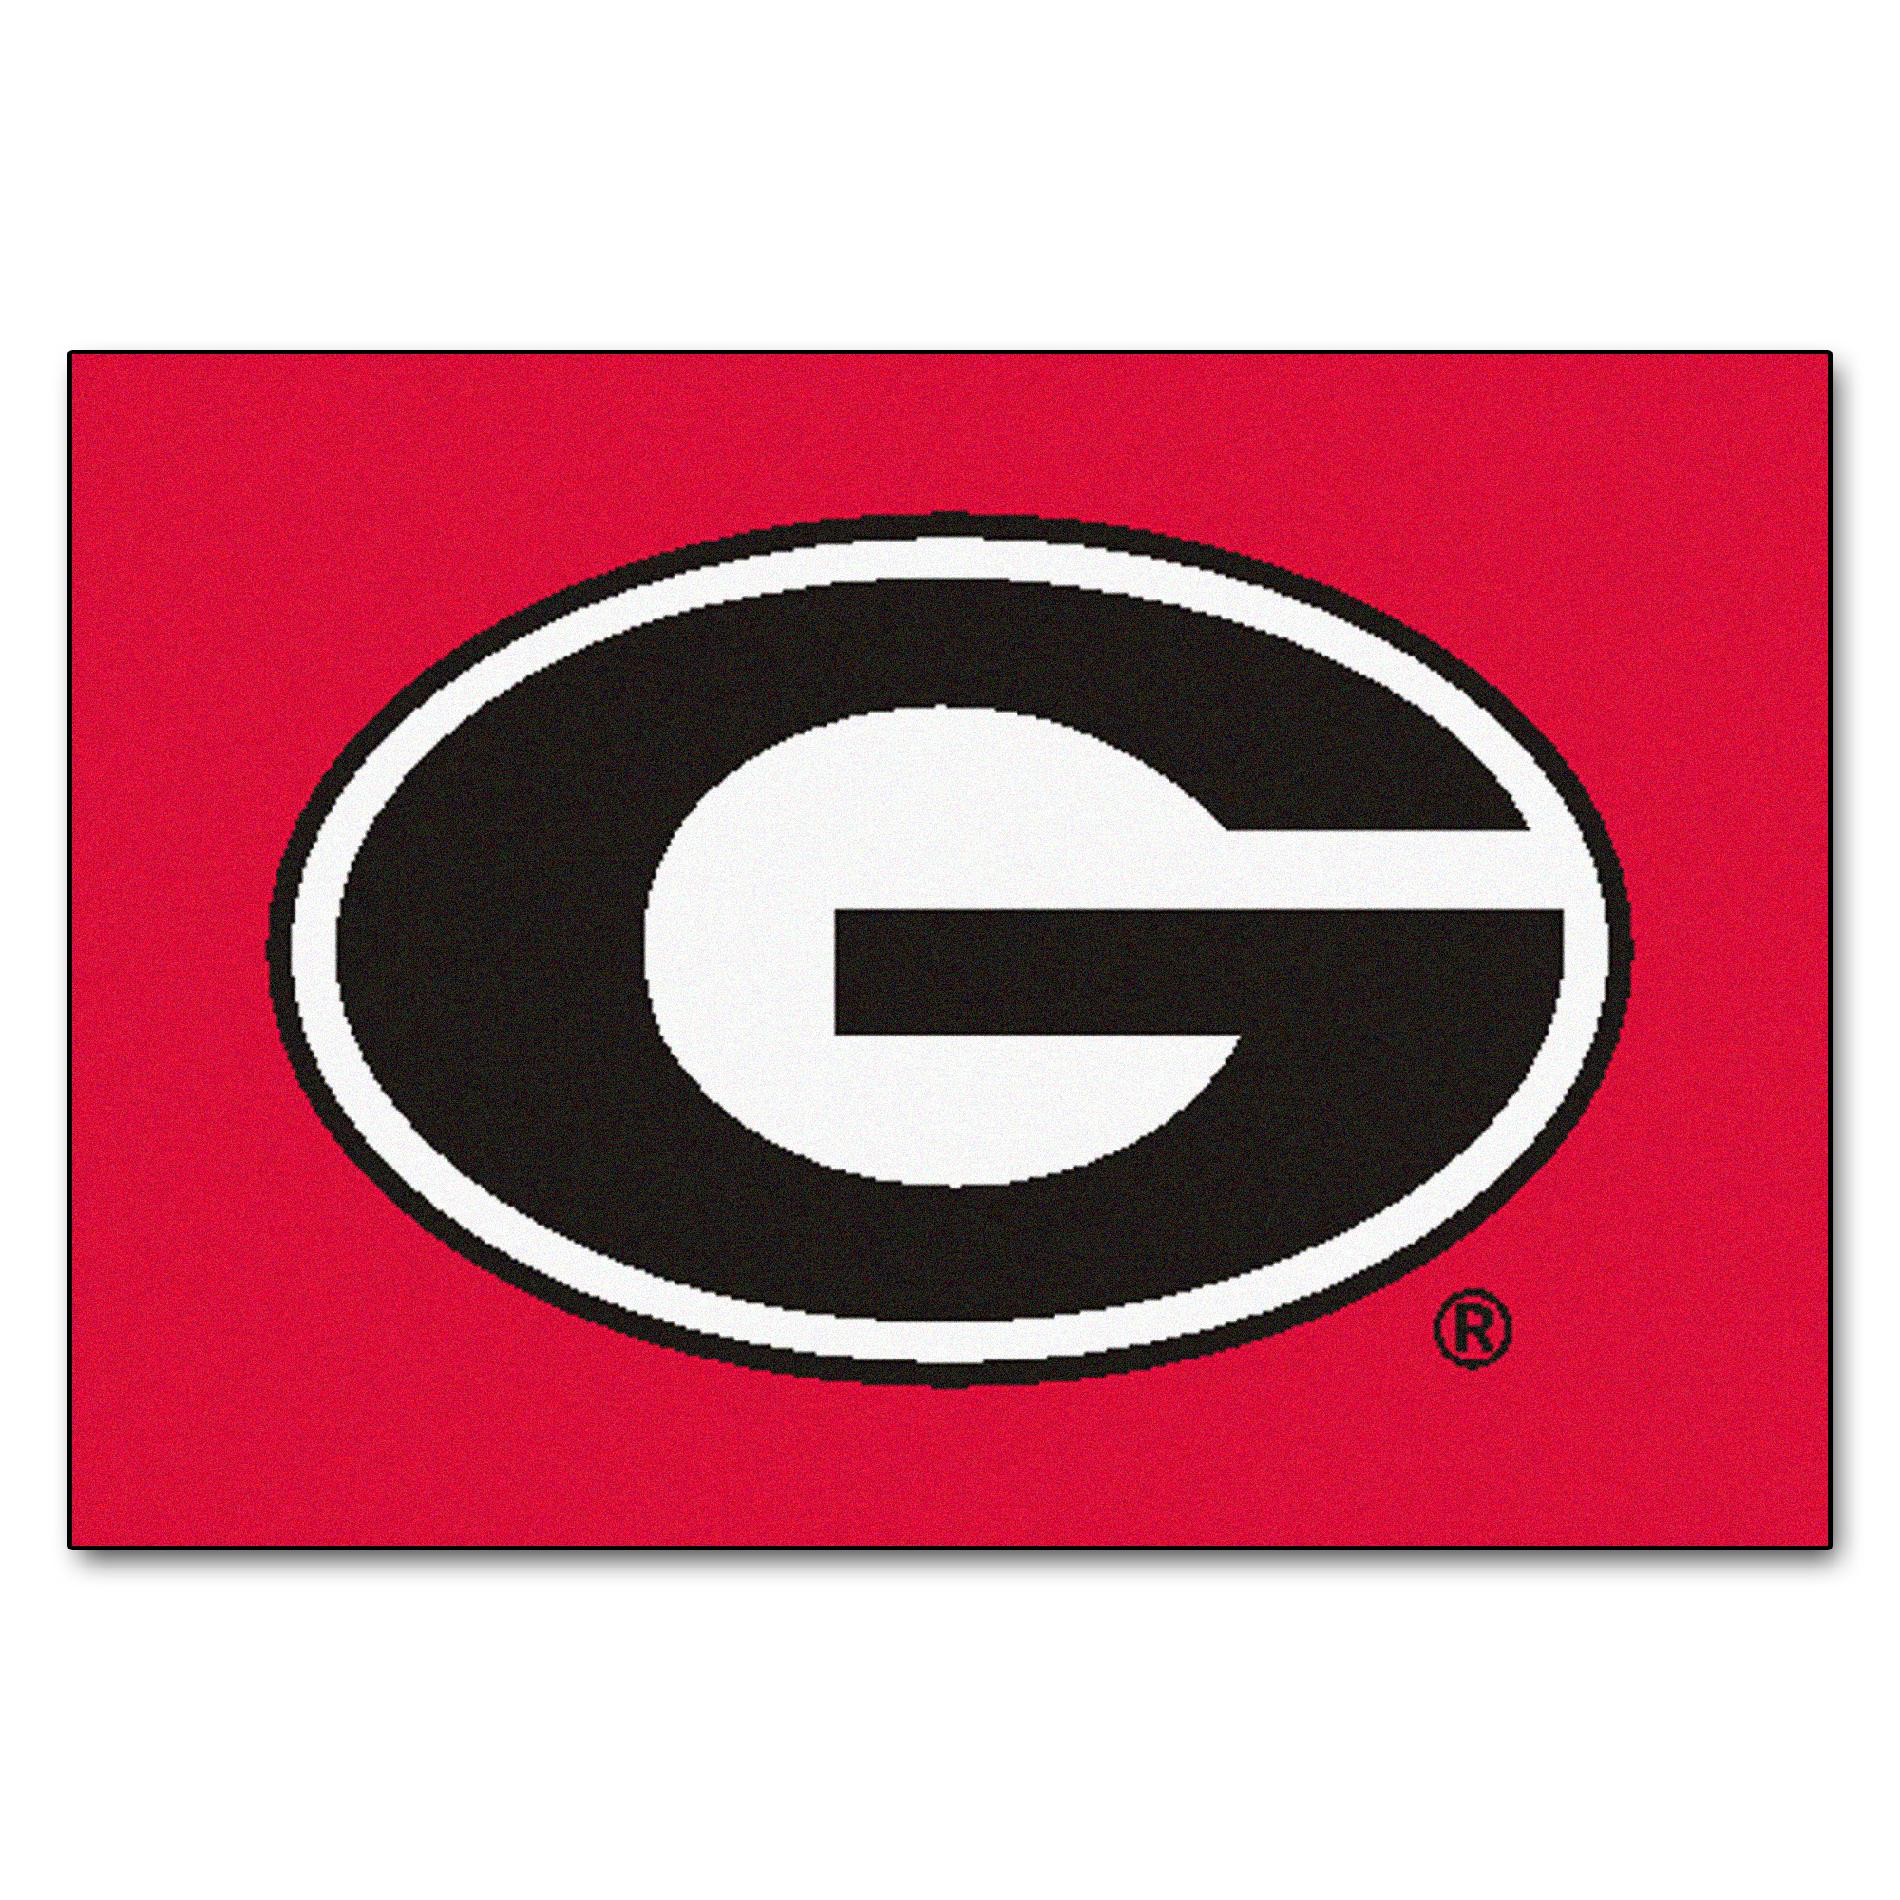 Georgia Starter-Red "G" Logo Rug 20" x 30"